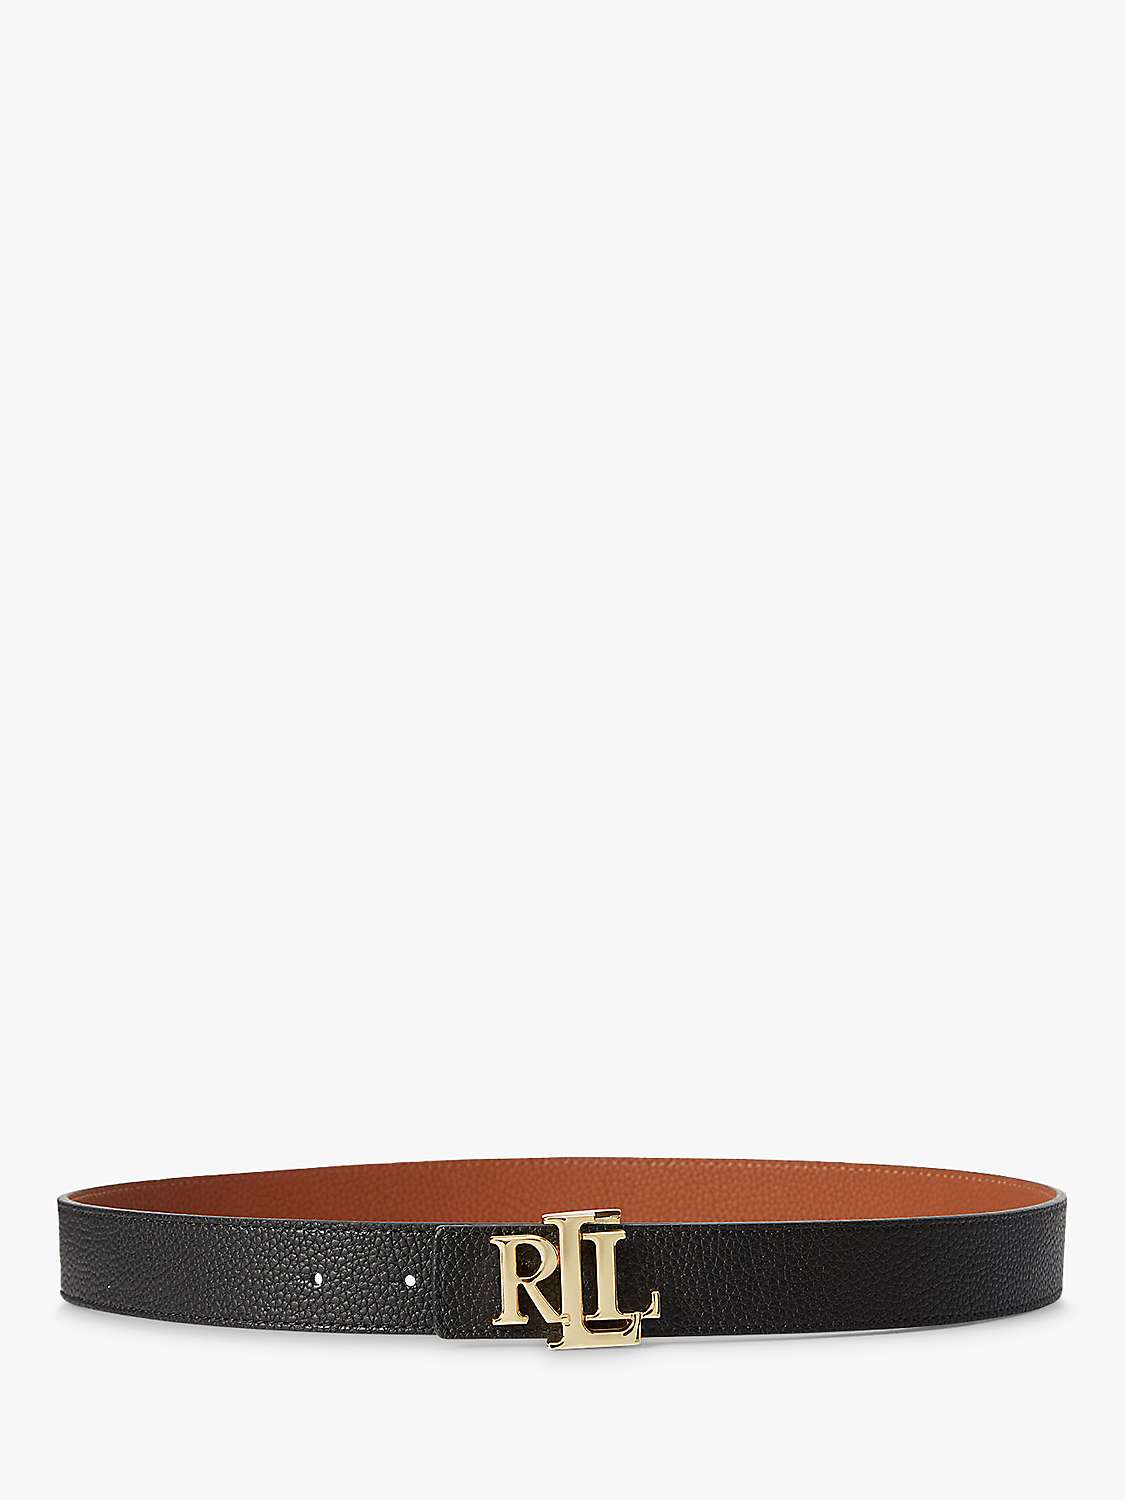 Buy Ralph Lauren Casual Leather Dress Belt, Black/Tan Online at johnlewis.com